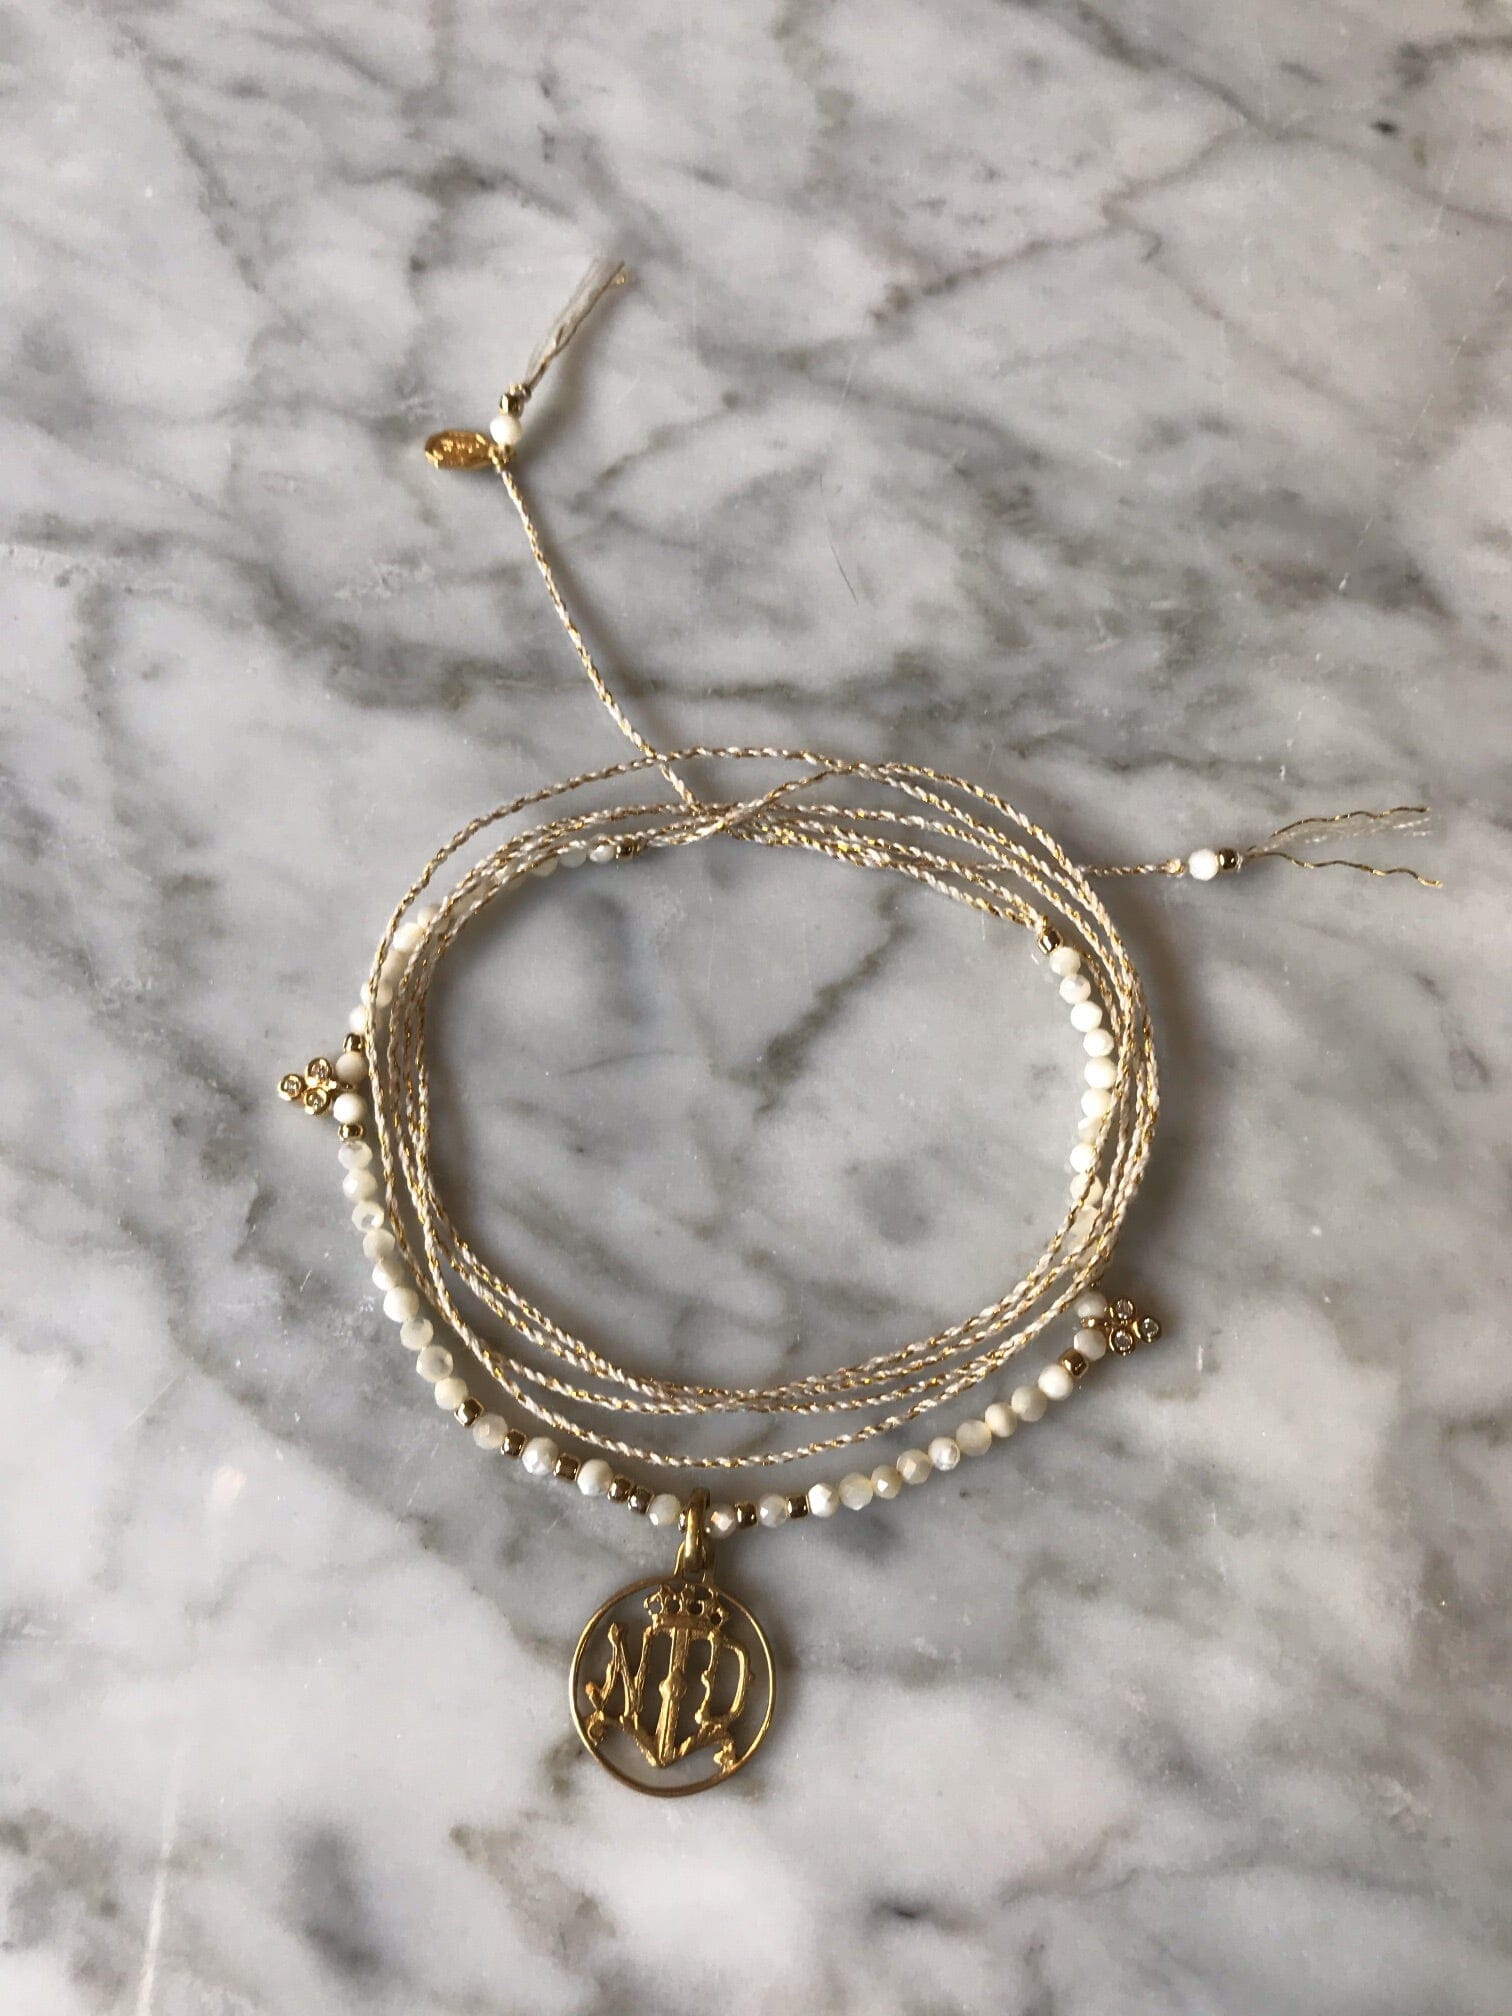  white  stunning  soft  simple  pendant  pearls  mother-of-pearl  jewelry  jewellery  japan  gold  glamorous  cute  cotton  chic  brass  braid  bracelets  bracelet  boho  bijoux  beads